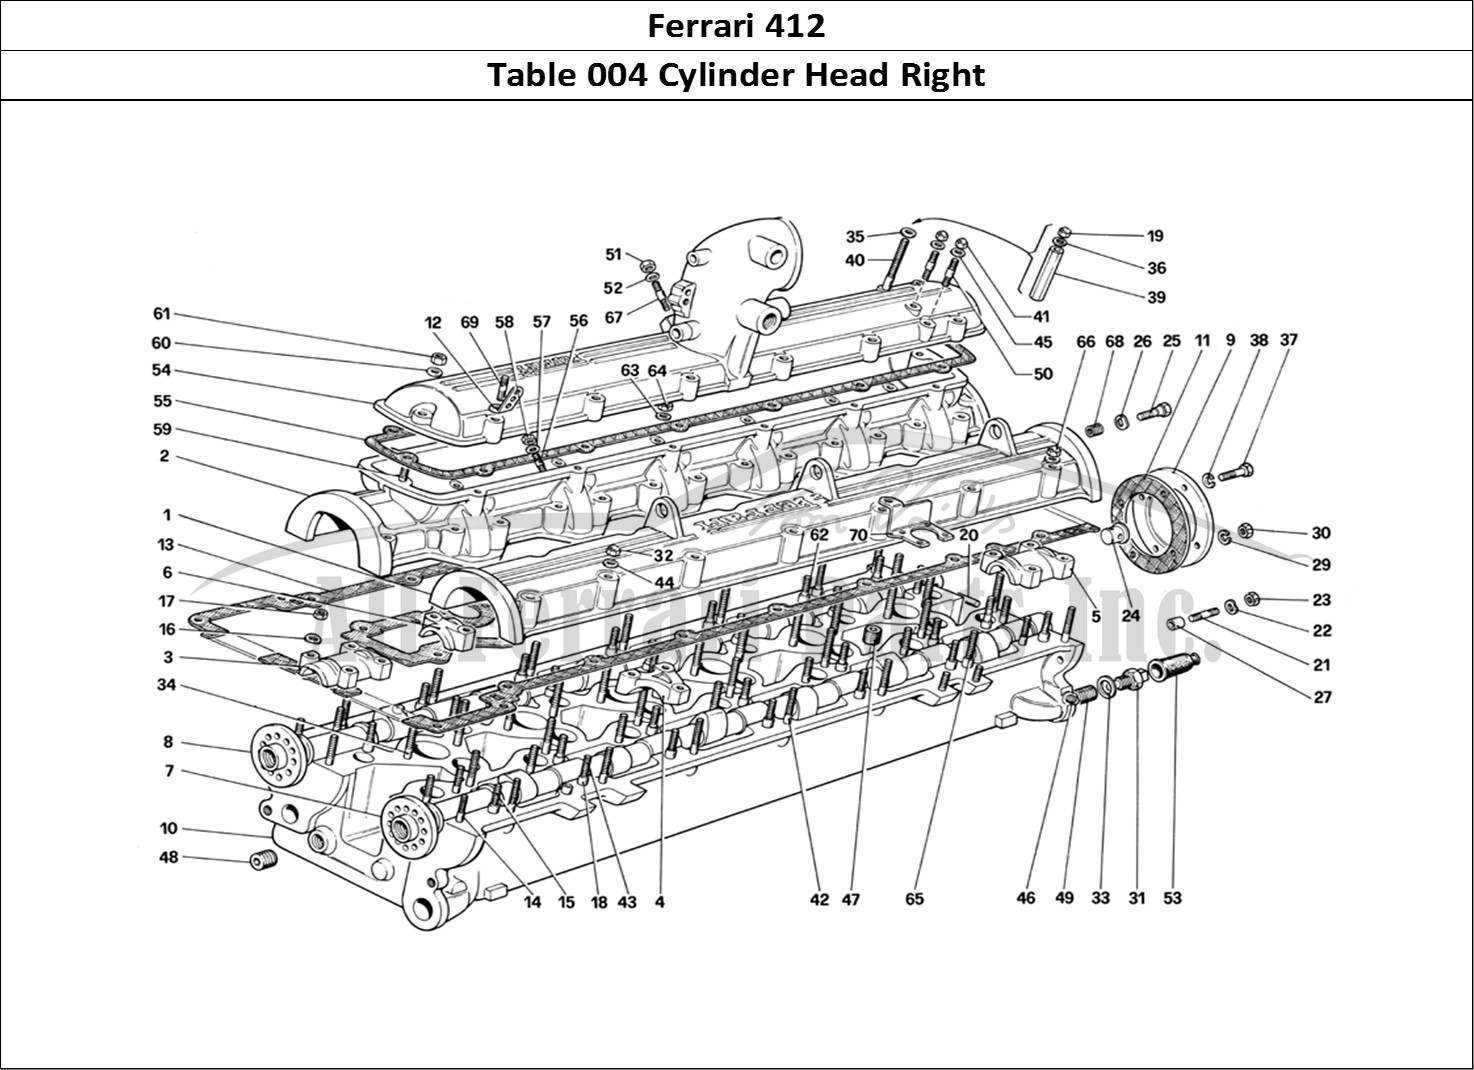 Ferrari Parts Ferrari 412 (Mechanical) Page 004 Cylinder Head (Right)